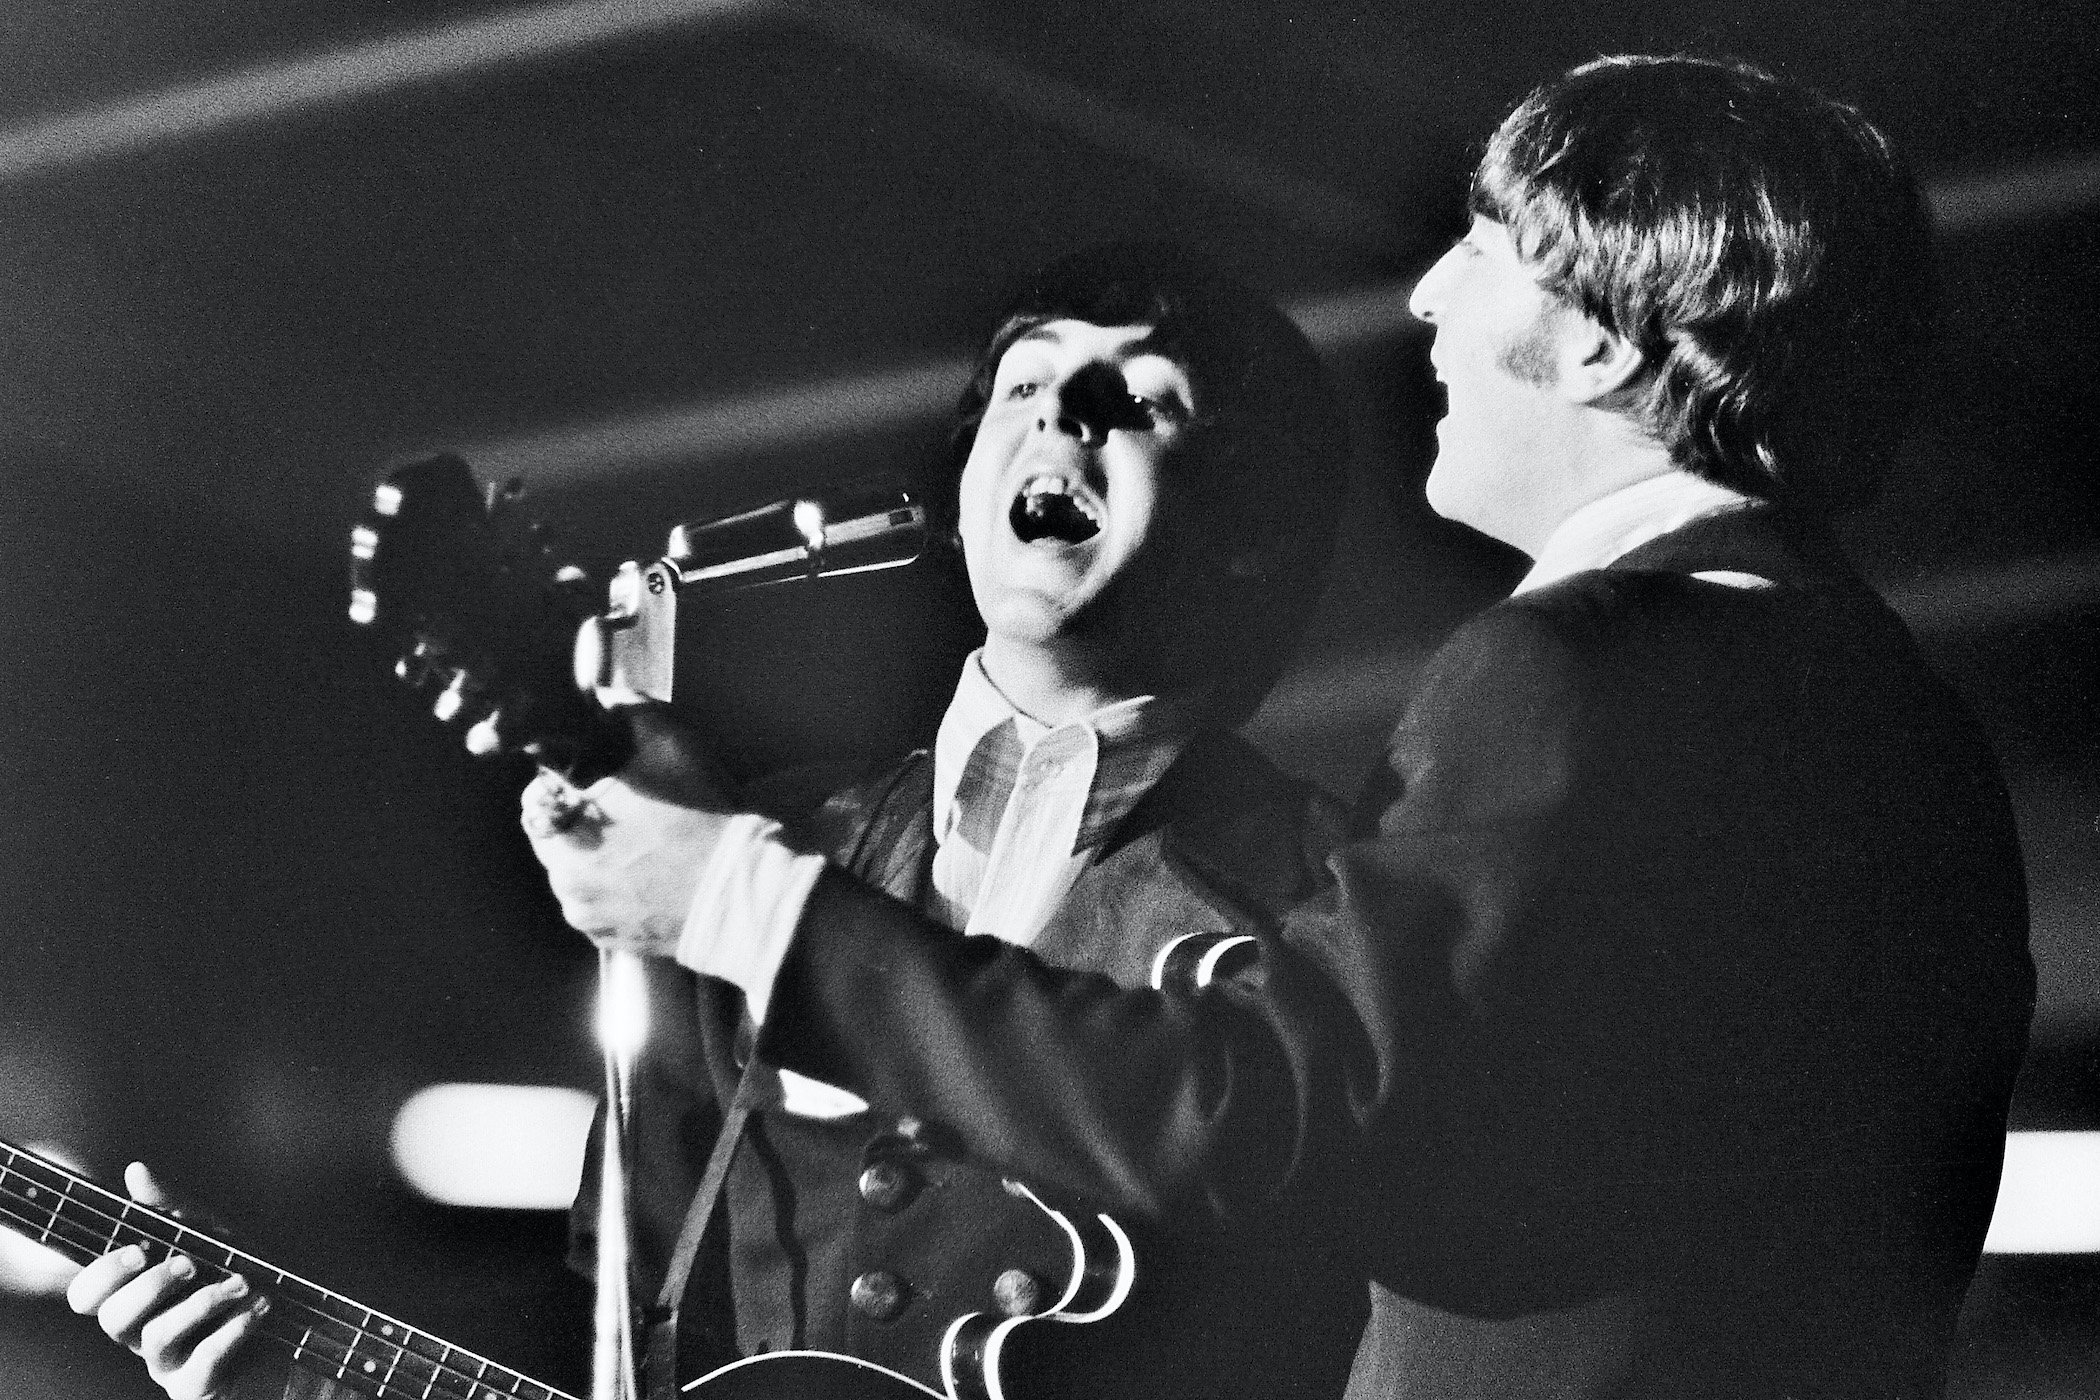 Paul McCartney and John Lennon of The Beatles perform in St. Louis, Missouri